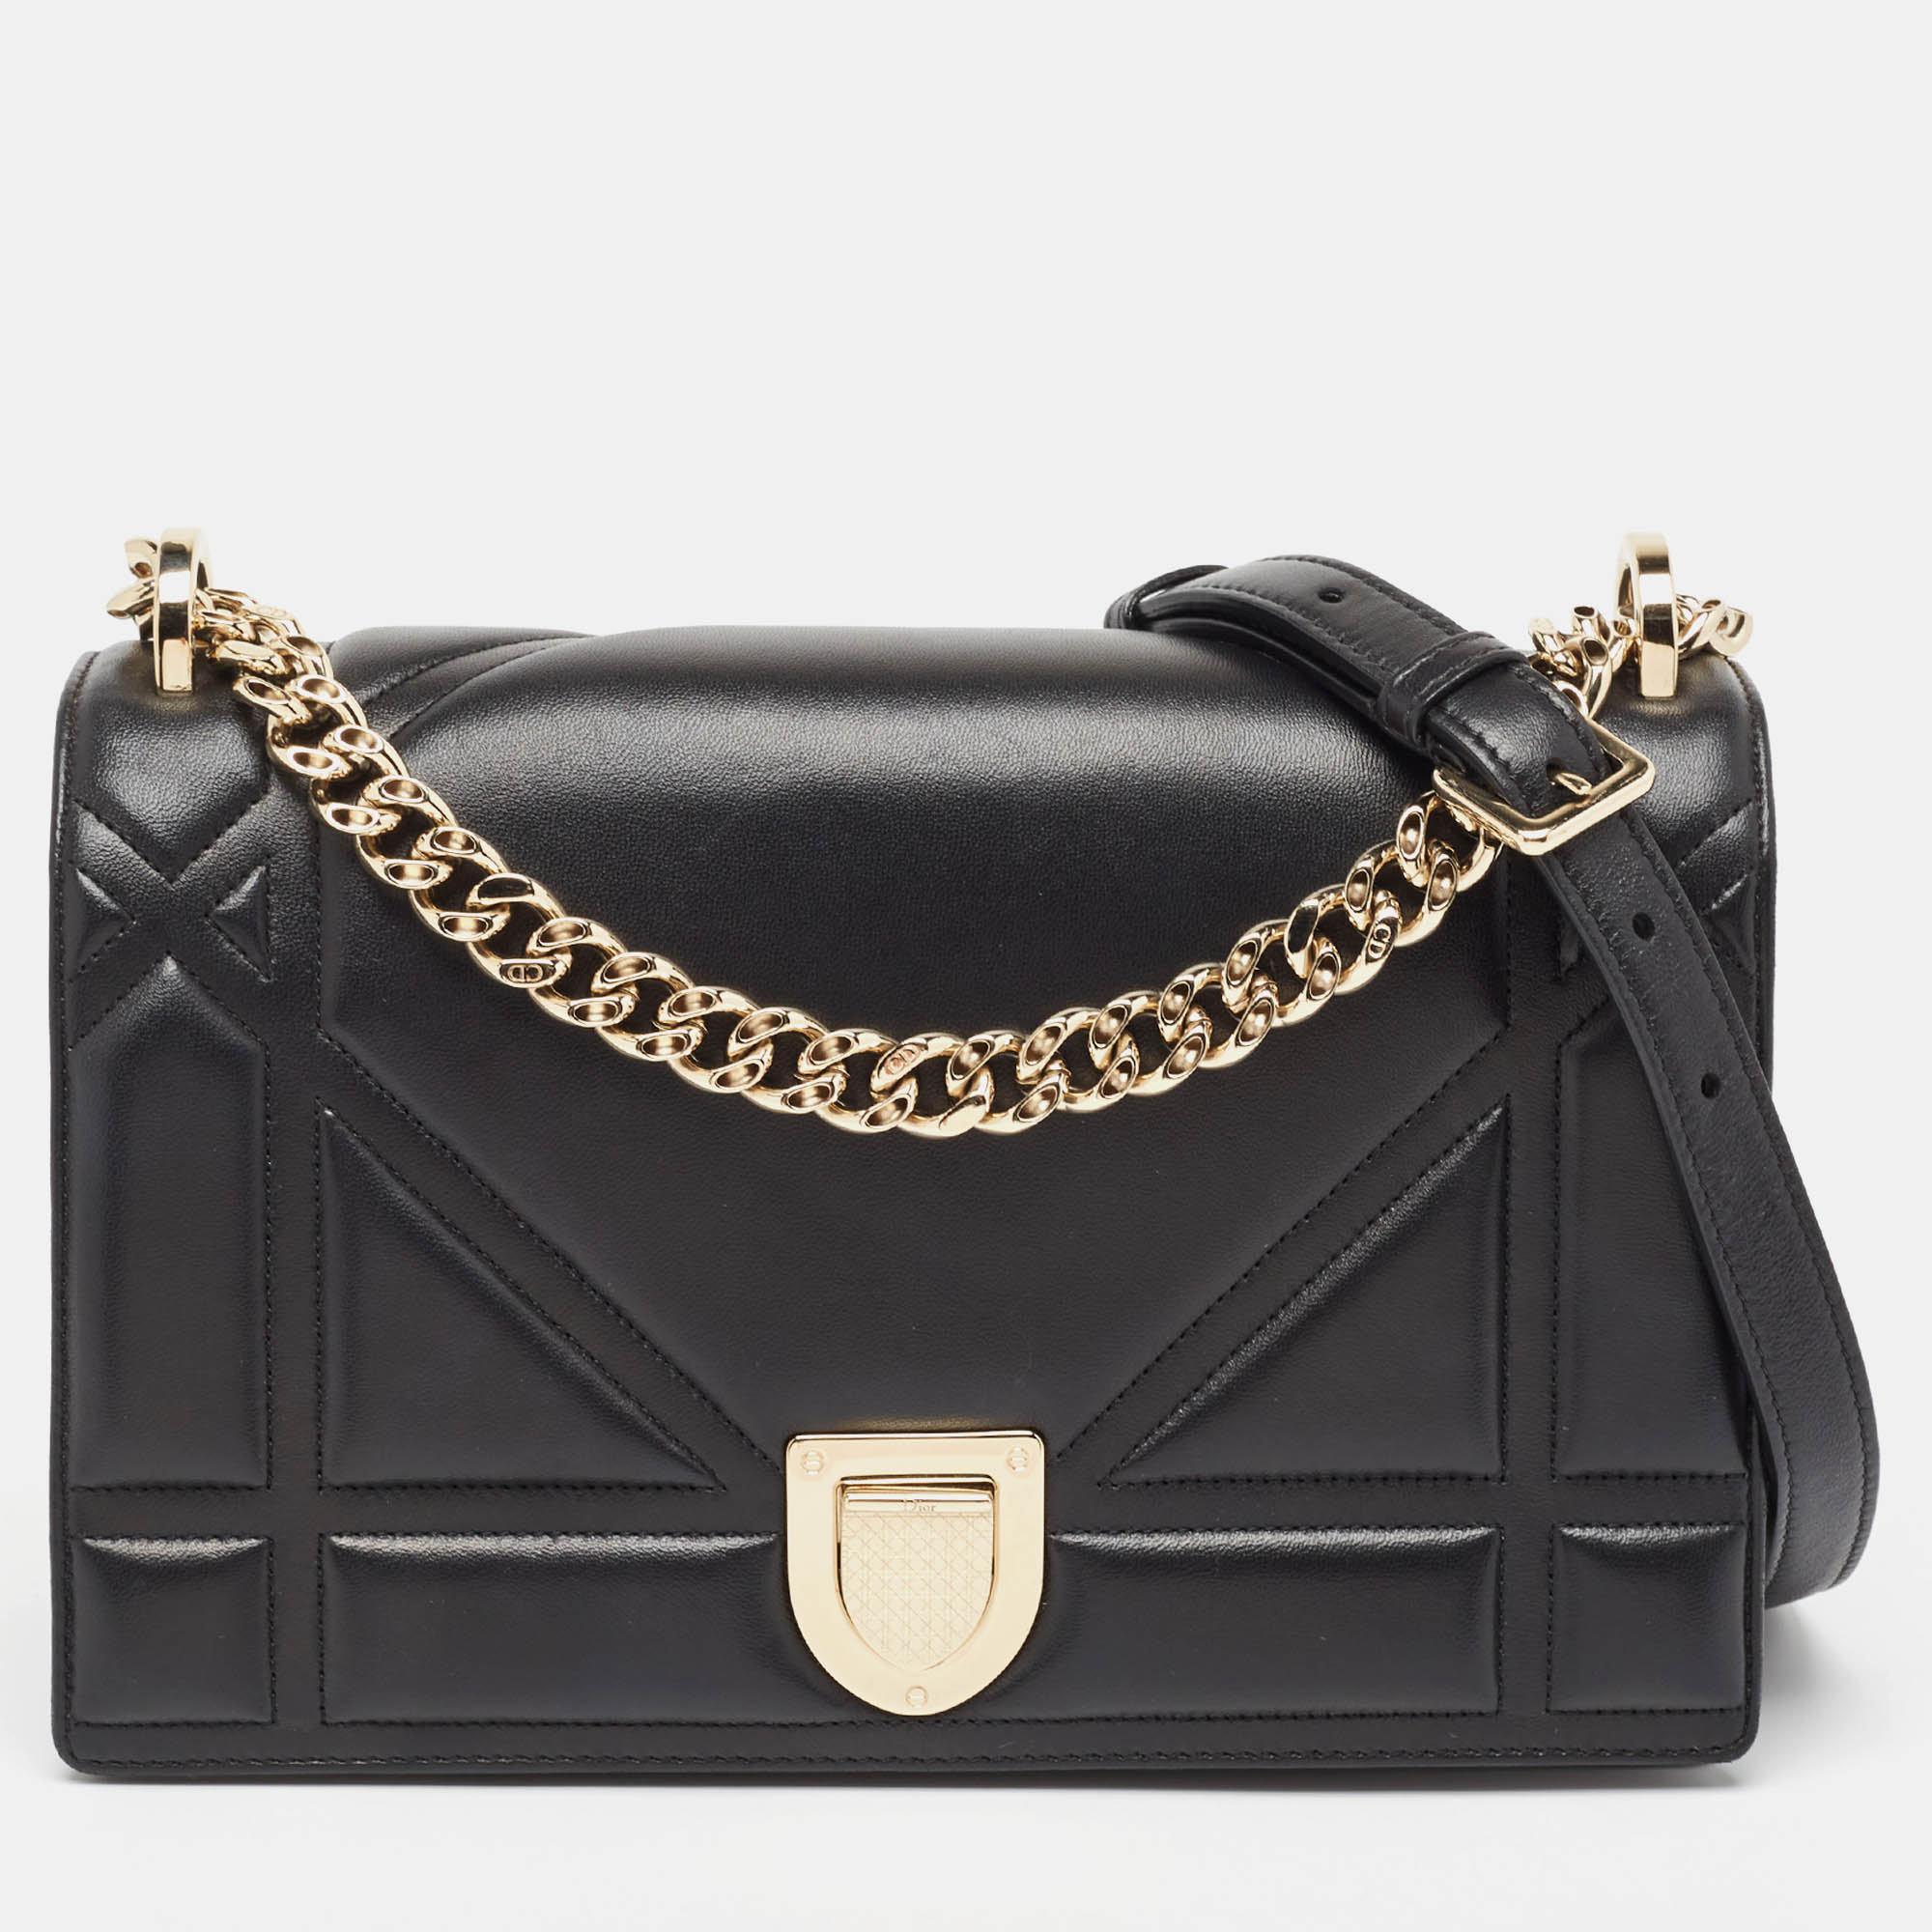 Dior black leather medium diorama flap shoulder bag